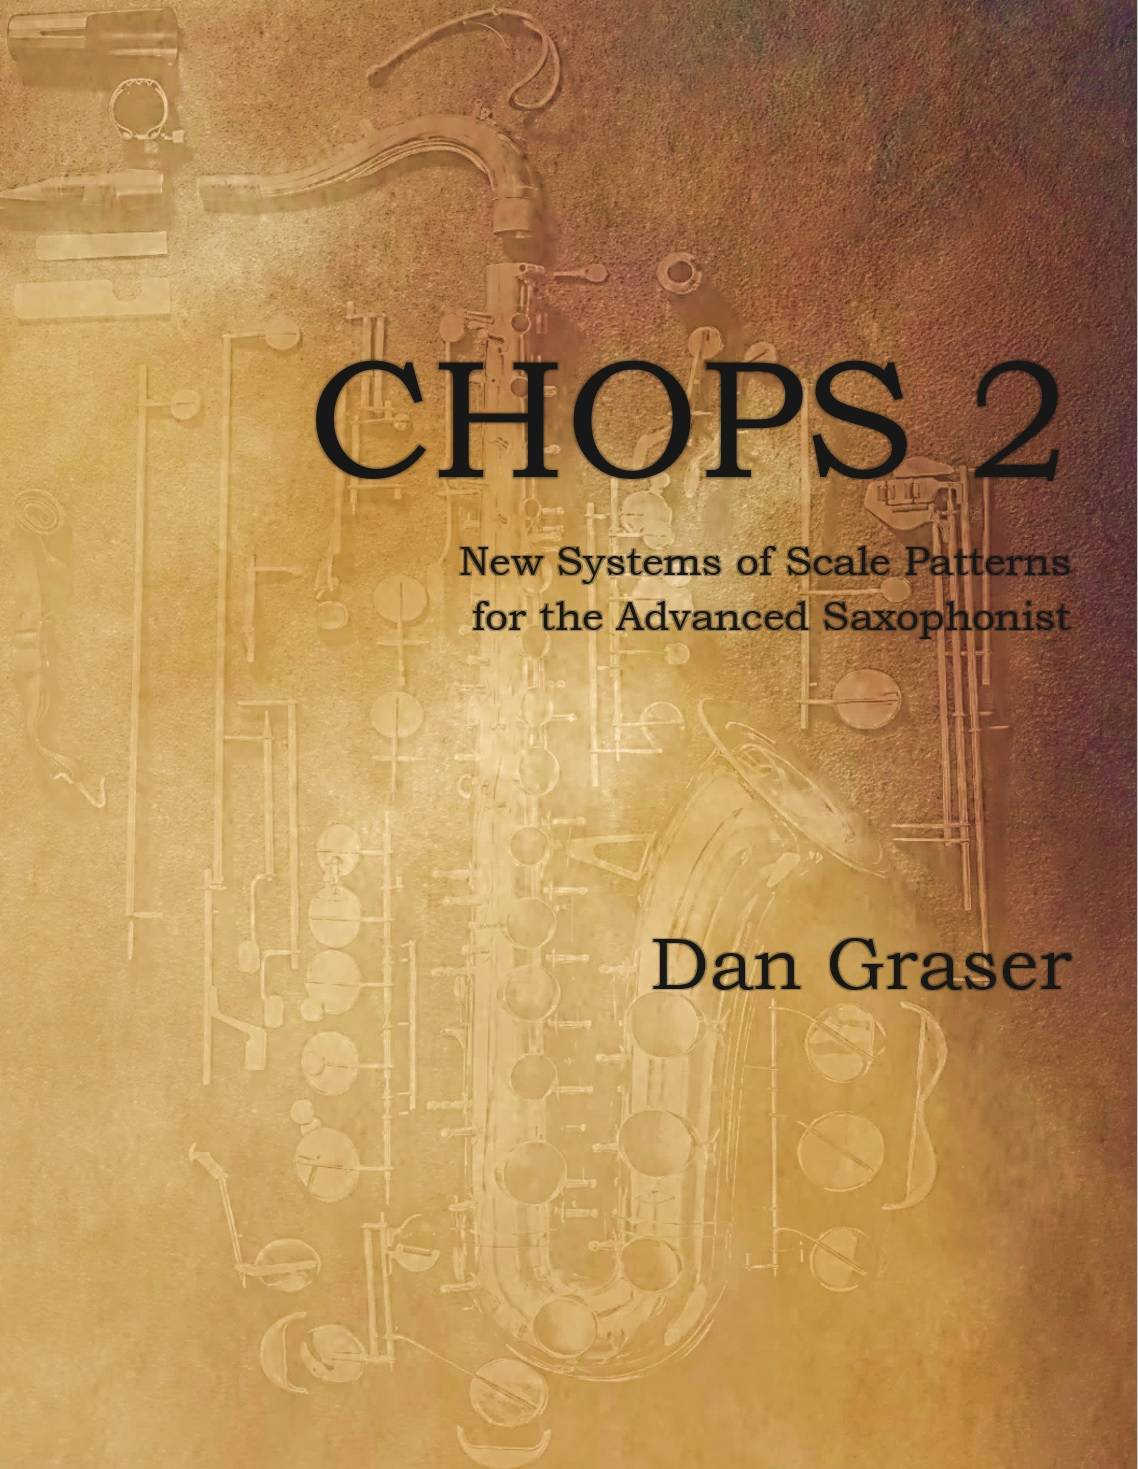 Chops 2 by Dan Graser